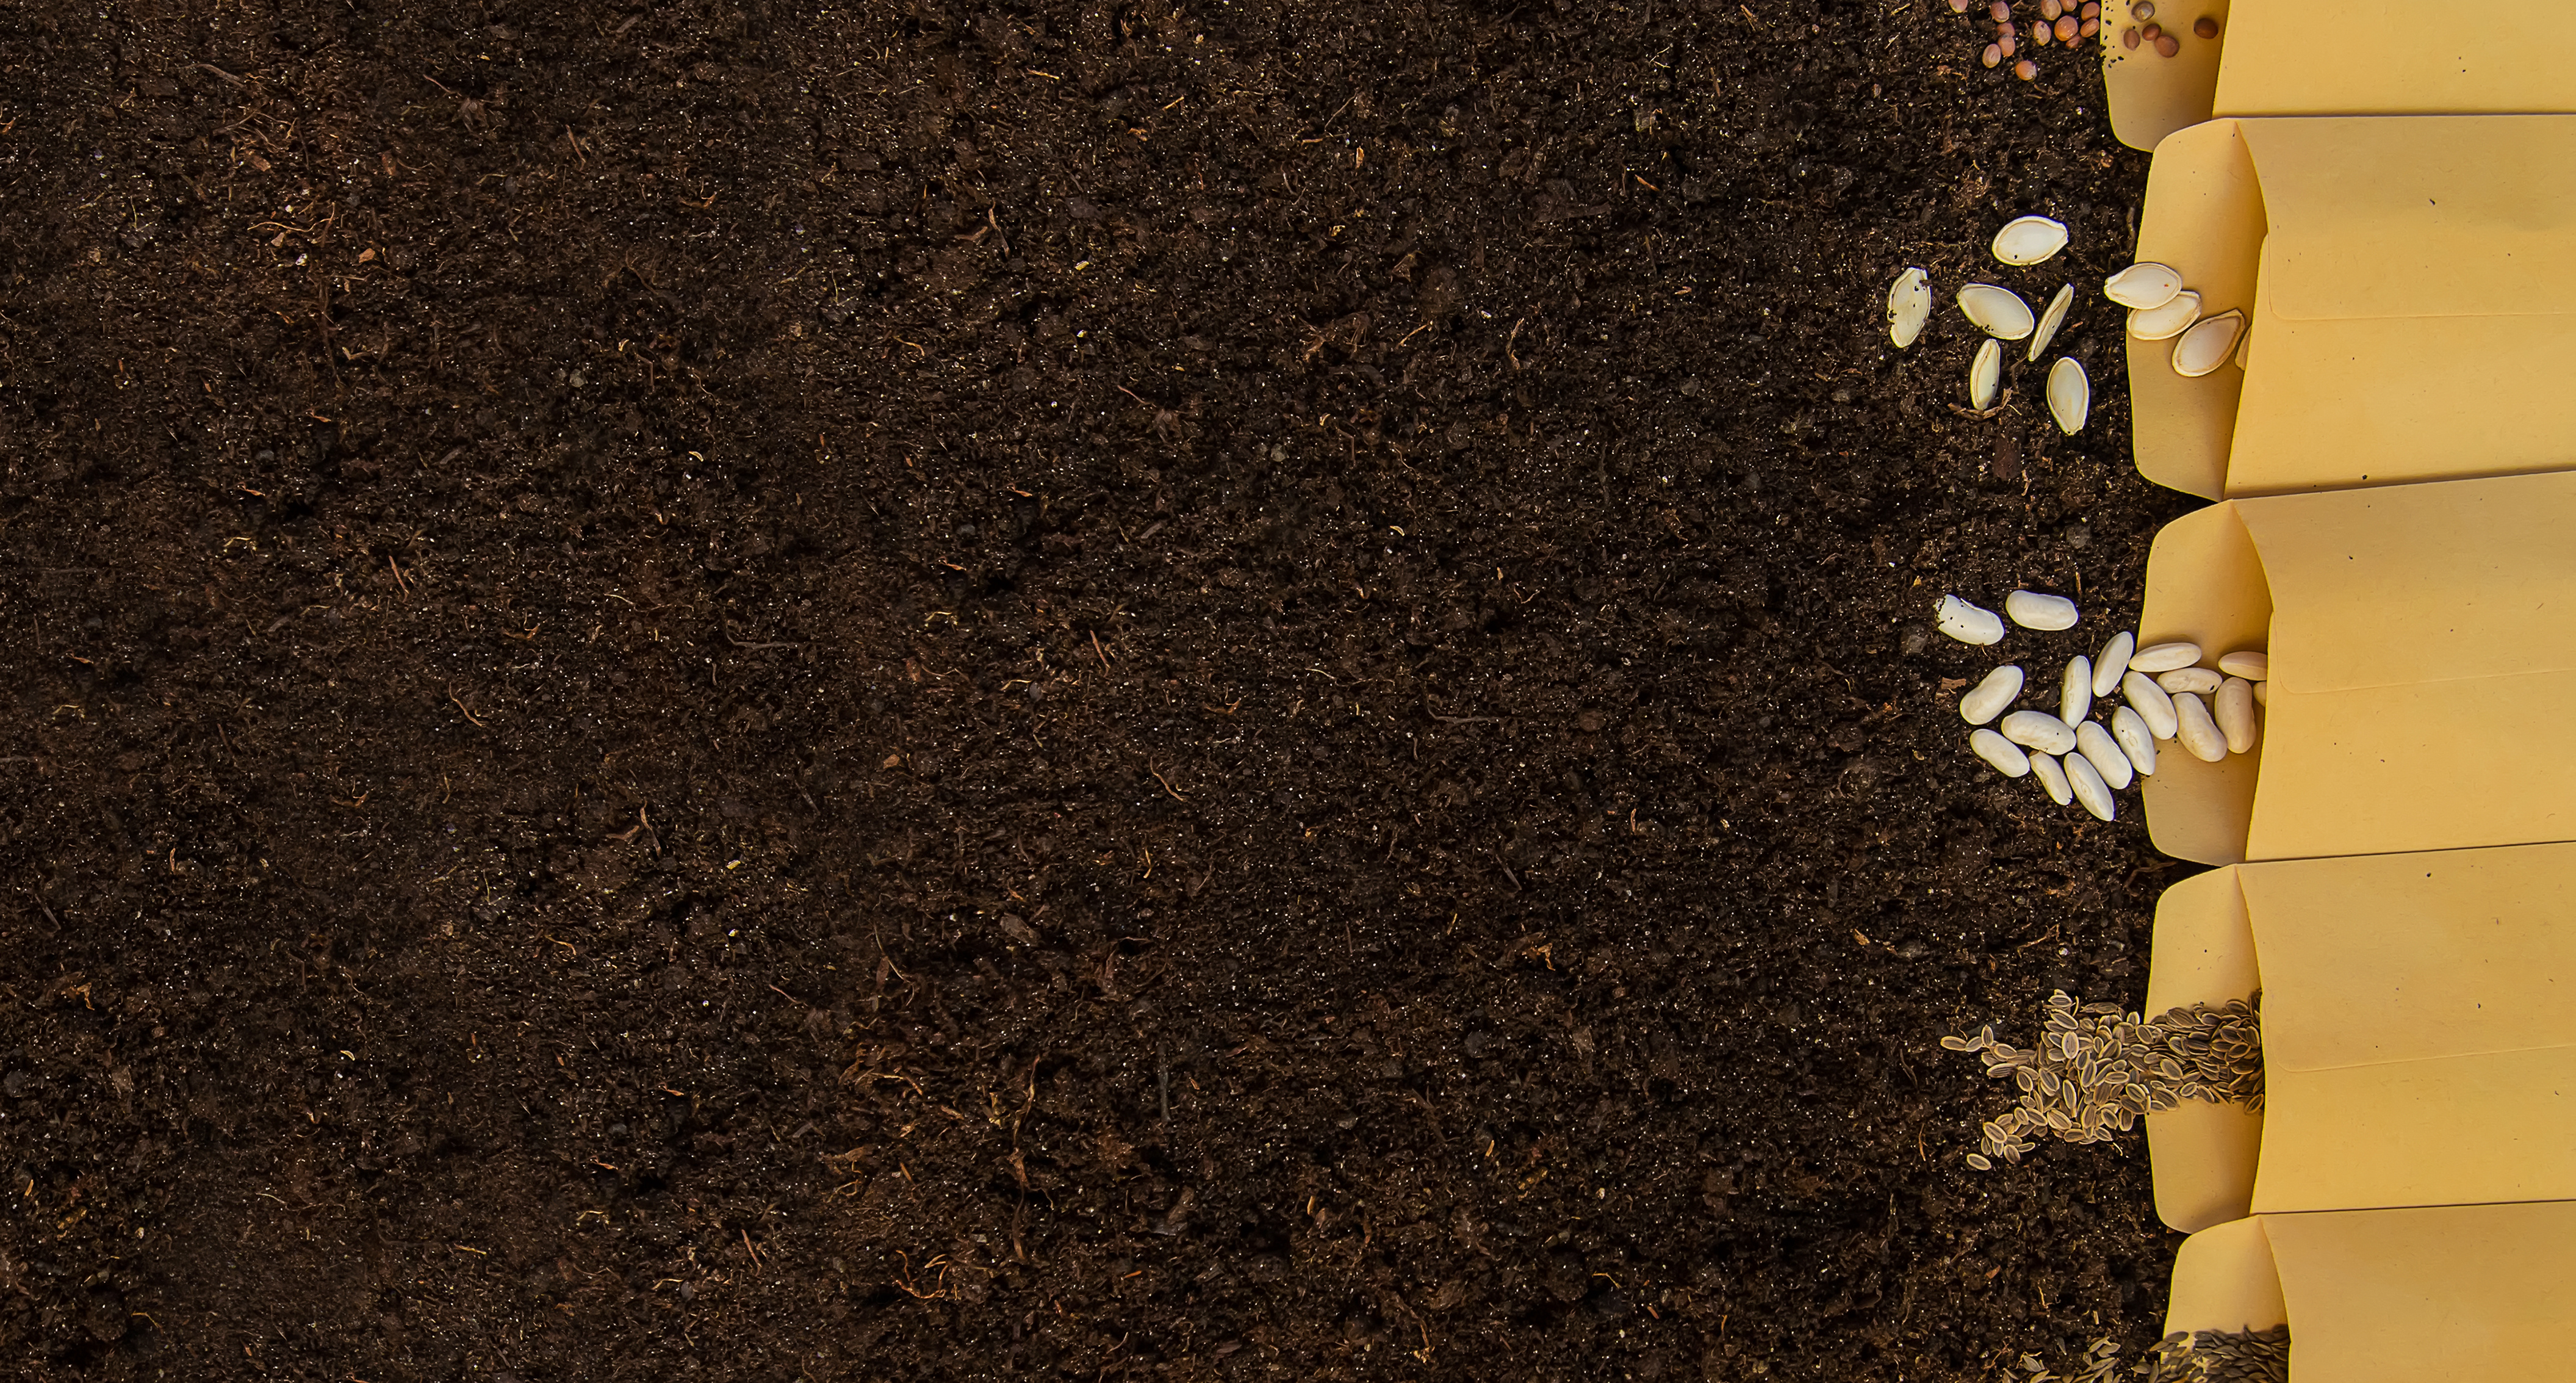 seed soil